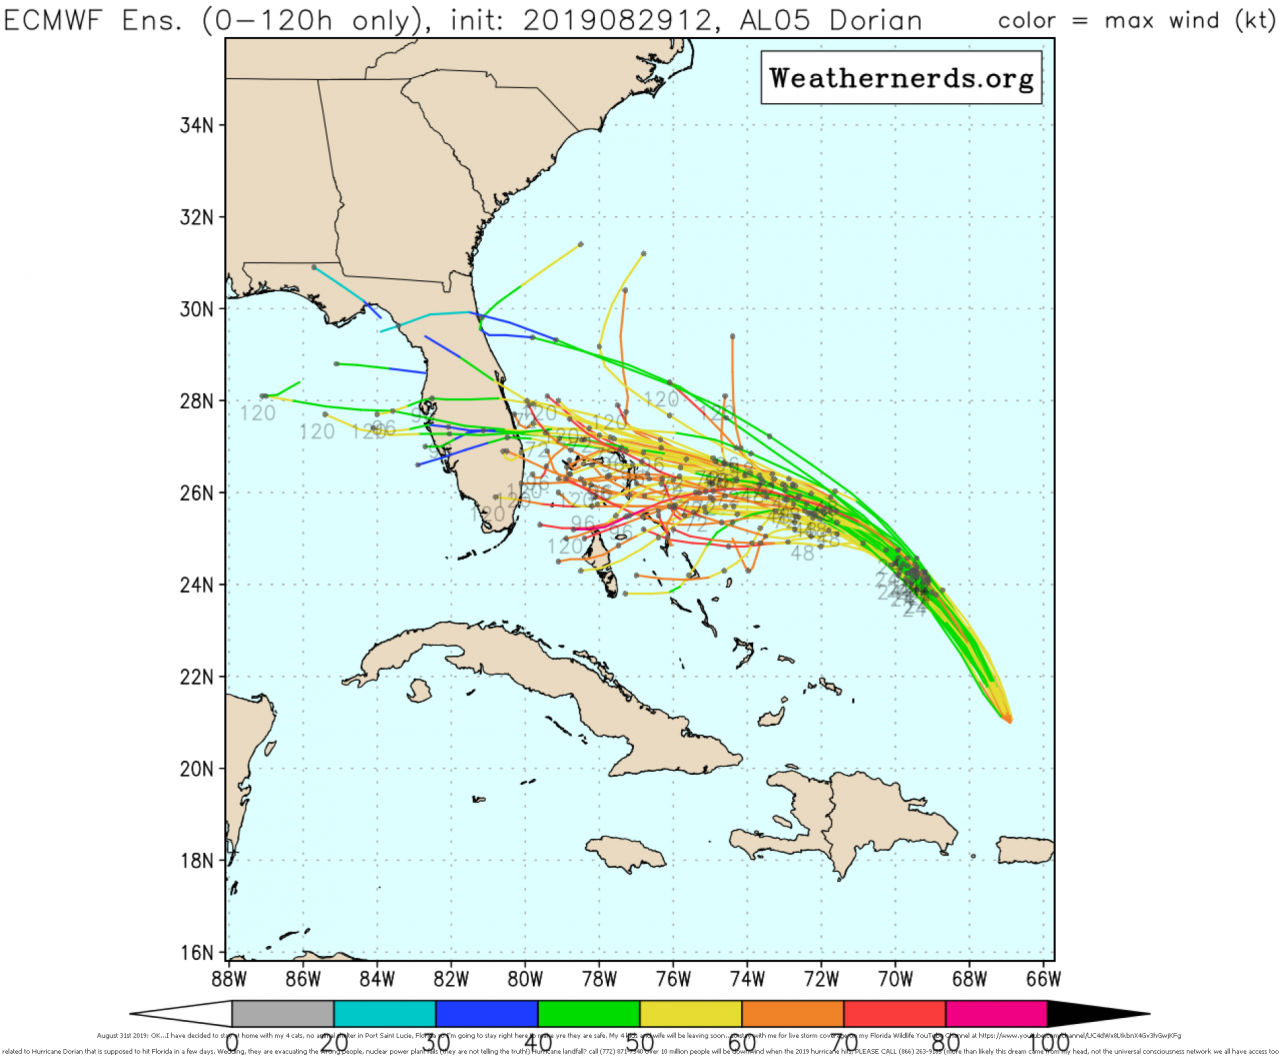 Hurricane Dorian Aug 2019 prediction by Psychic Brian Ladd AL05 2019082912 ECENS 0-120h large-1
Hurricane Dorian Aug 2019 prediction by Psychic Brian Ladd AL05 2019082912 ECENS 0-120h large-1
